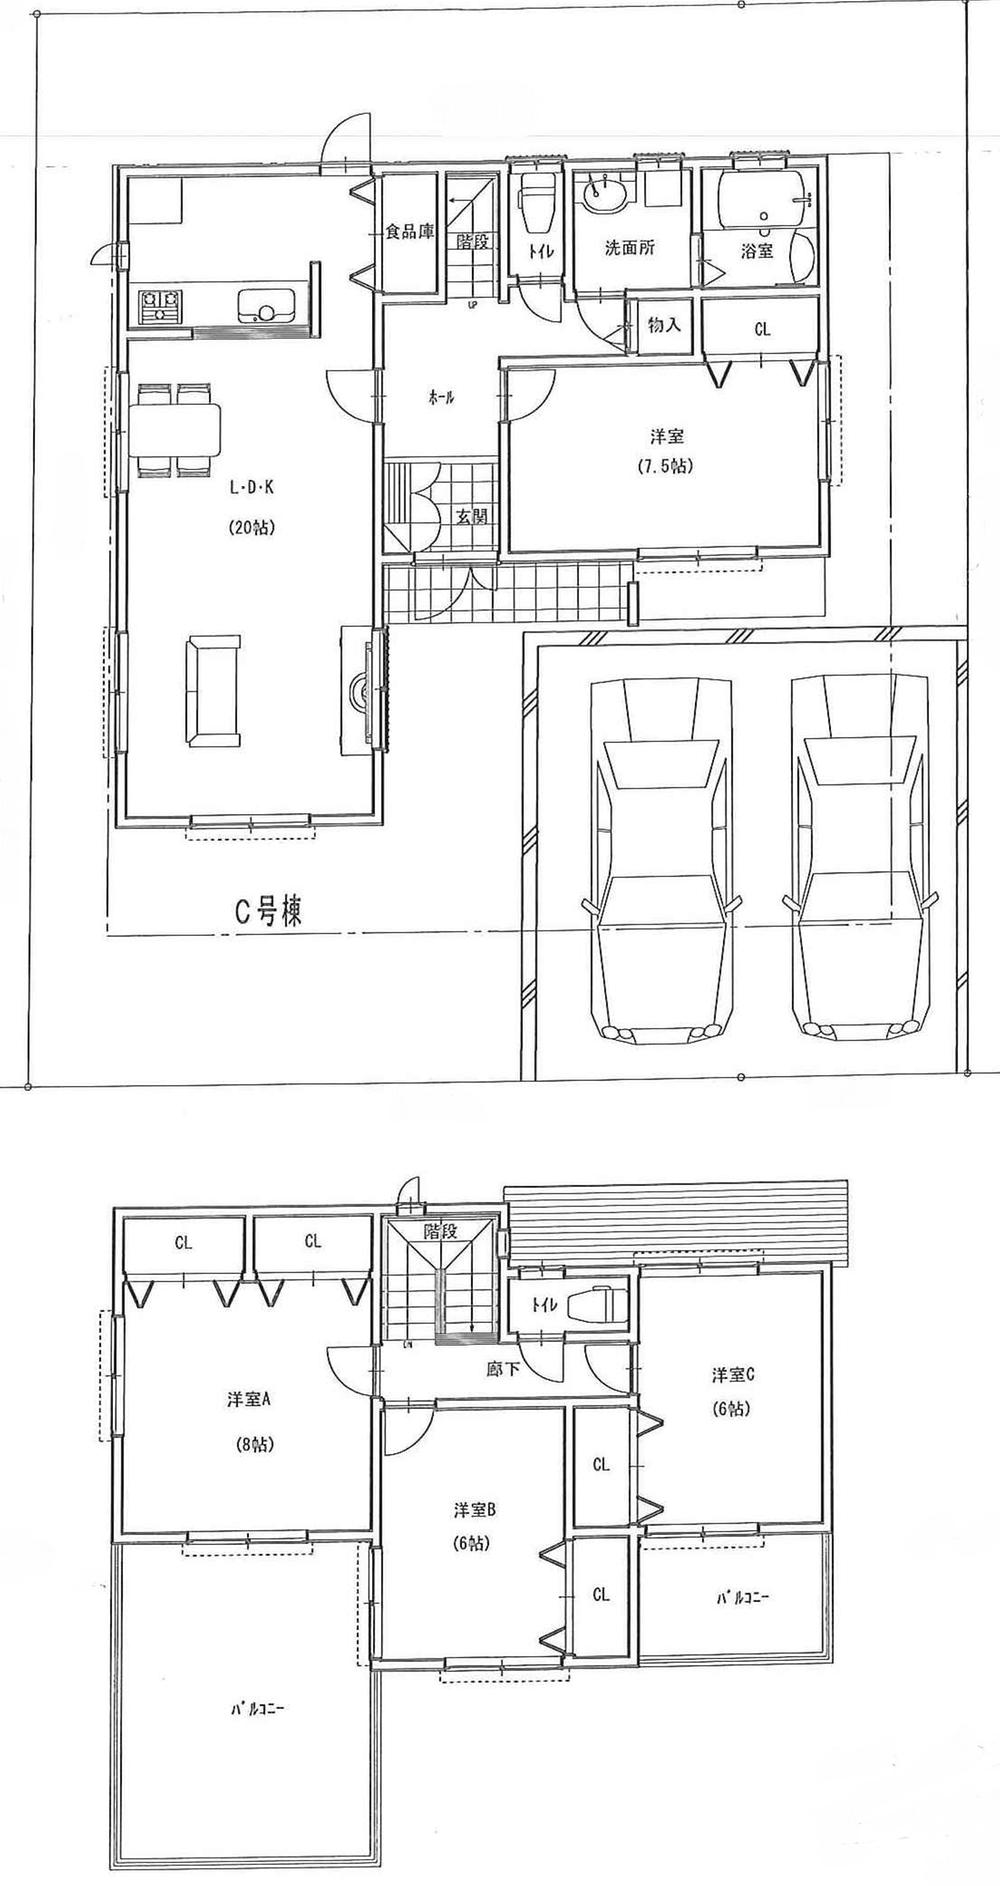 Building plan example (floor plan). Building plan example (C partition) 4LDK, Land price 32,300,000 yen, Land area 200.27 sq m , Building price 17.5 million yen, Building area 115.92 sq m